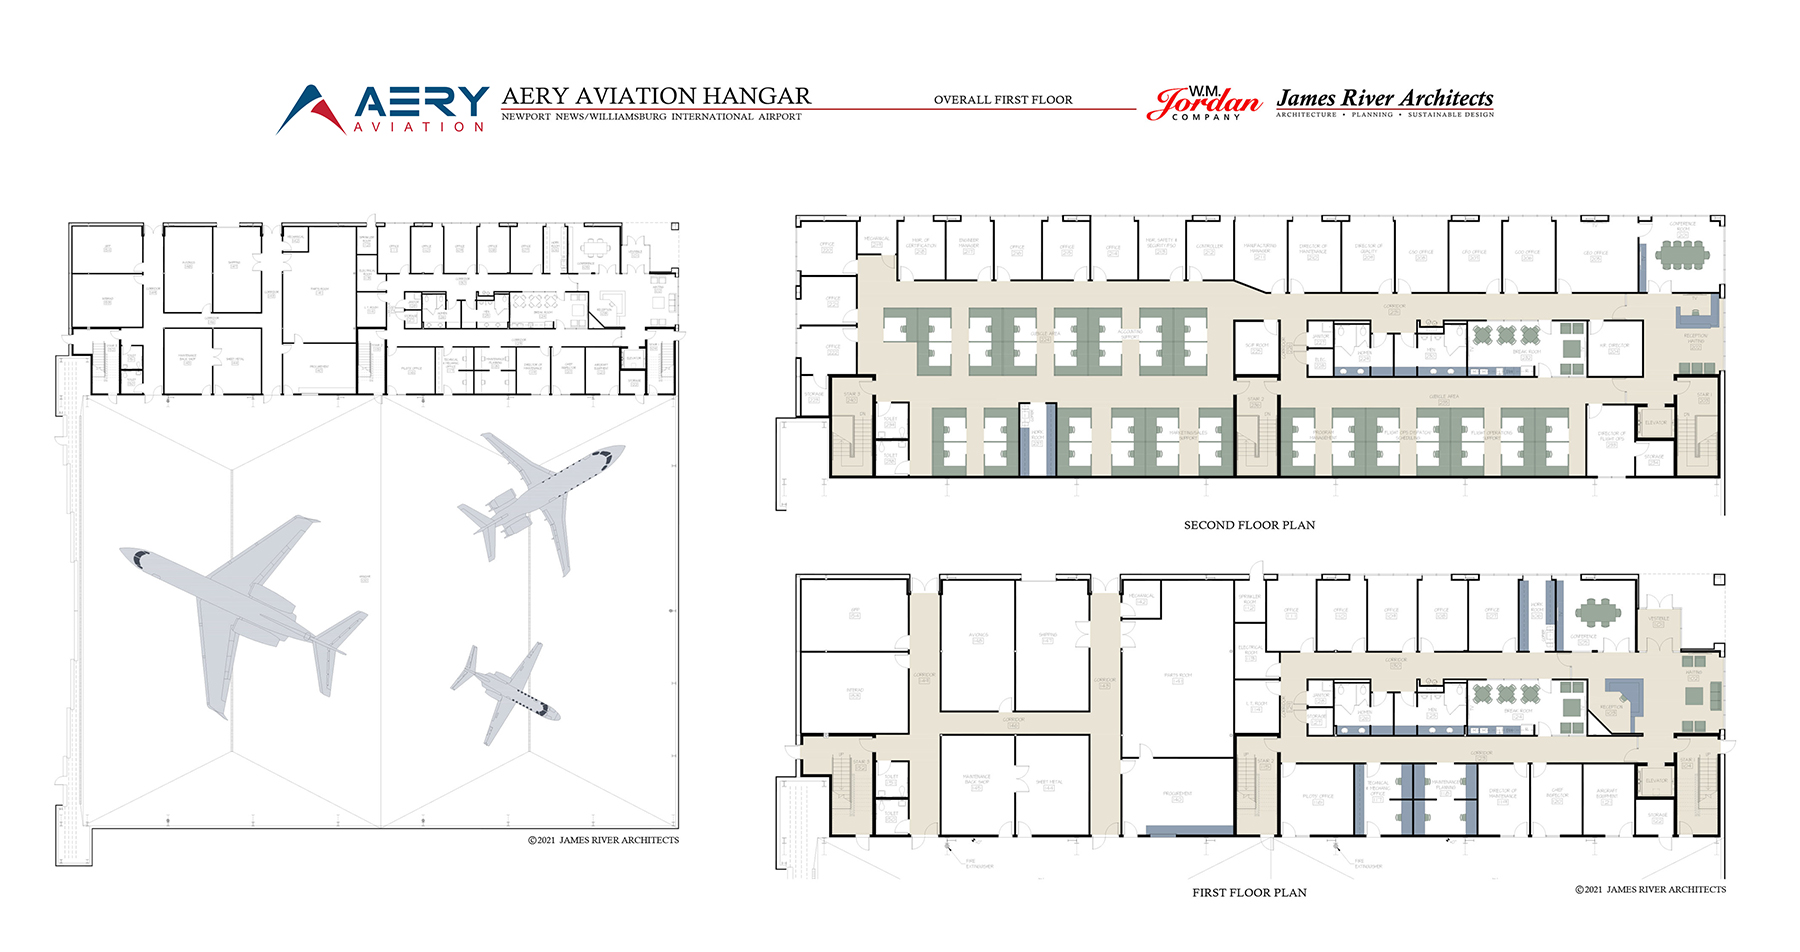 Floorplan of Aery Aviation's New Hangar and Offices in Newport News, VA